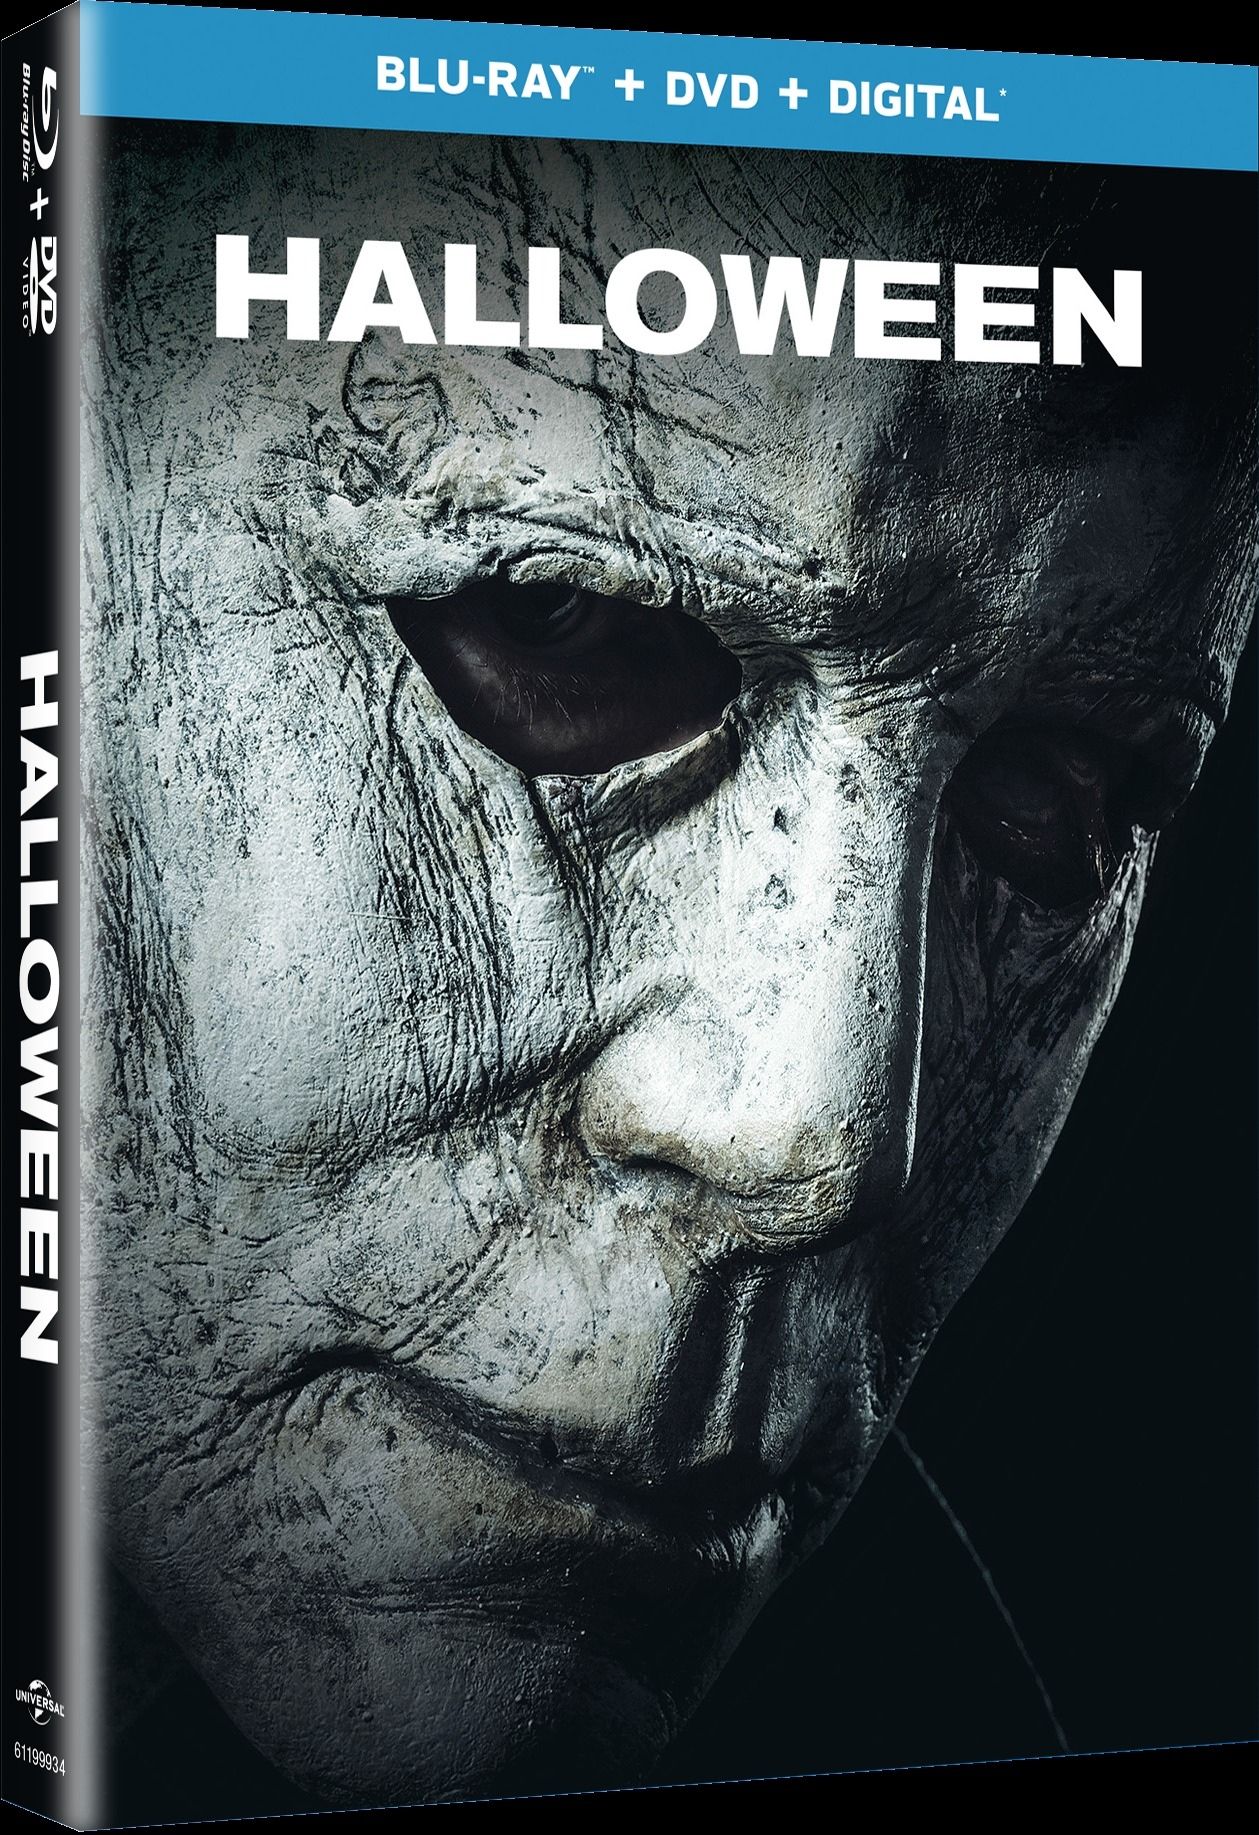 Halloween 2018 Blu-ray cover art